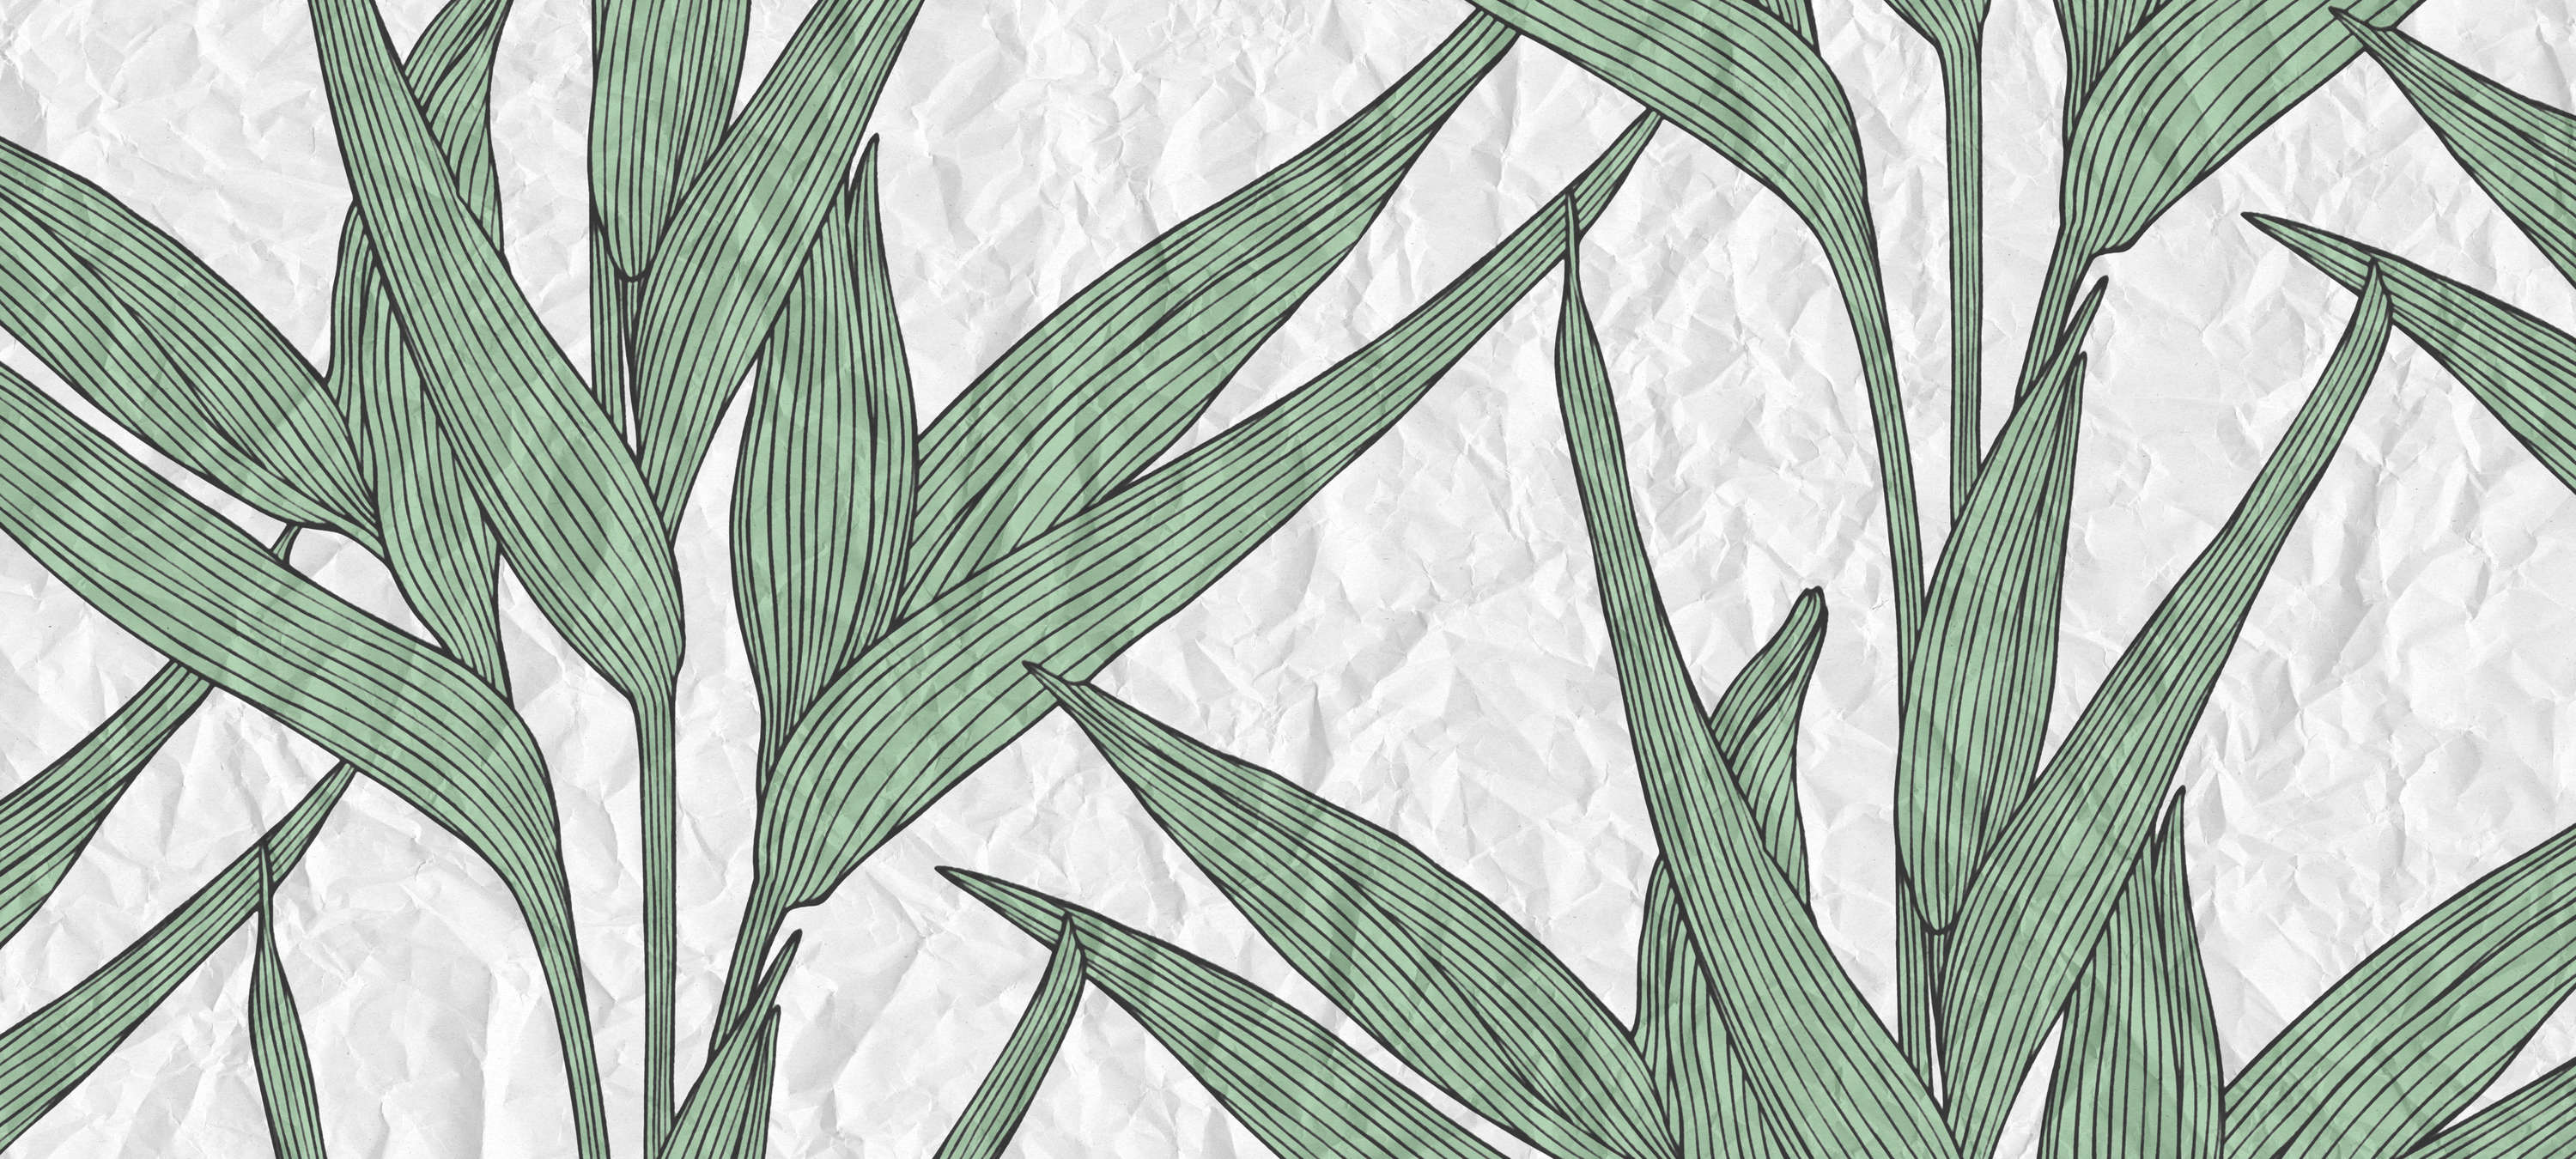             Papier peint Feuilles Motif & aspect papier - vert, blanc
        